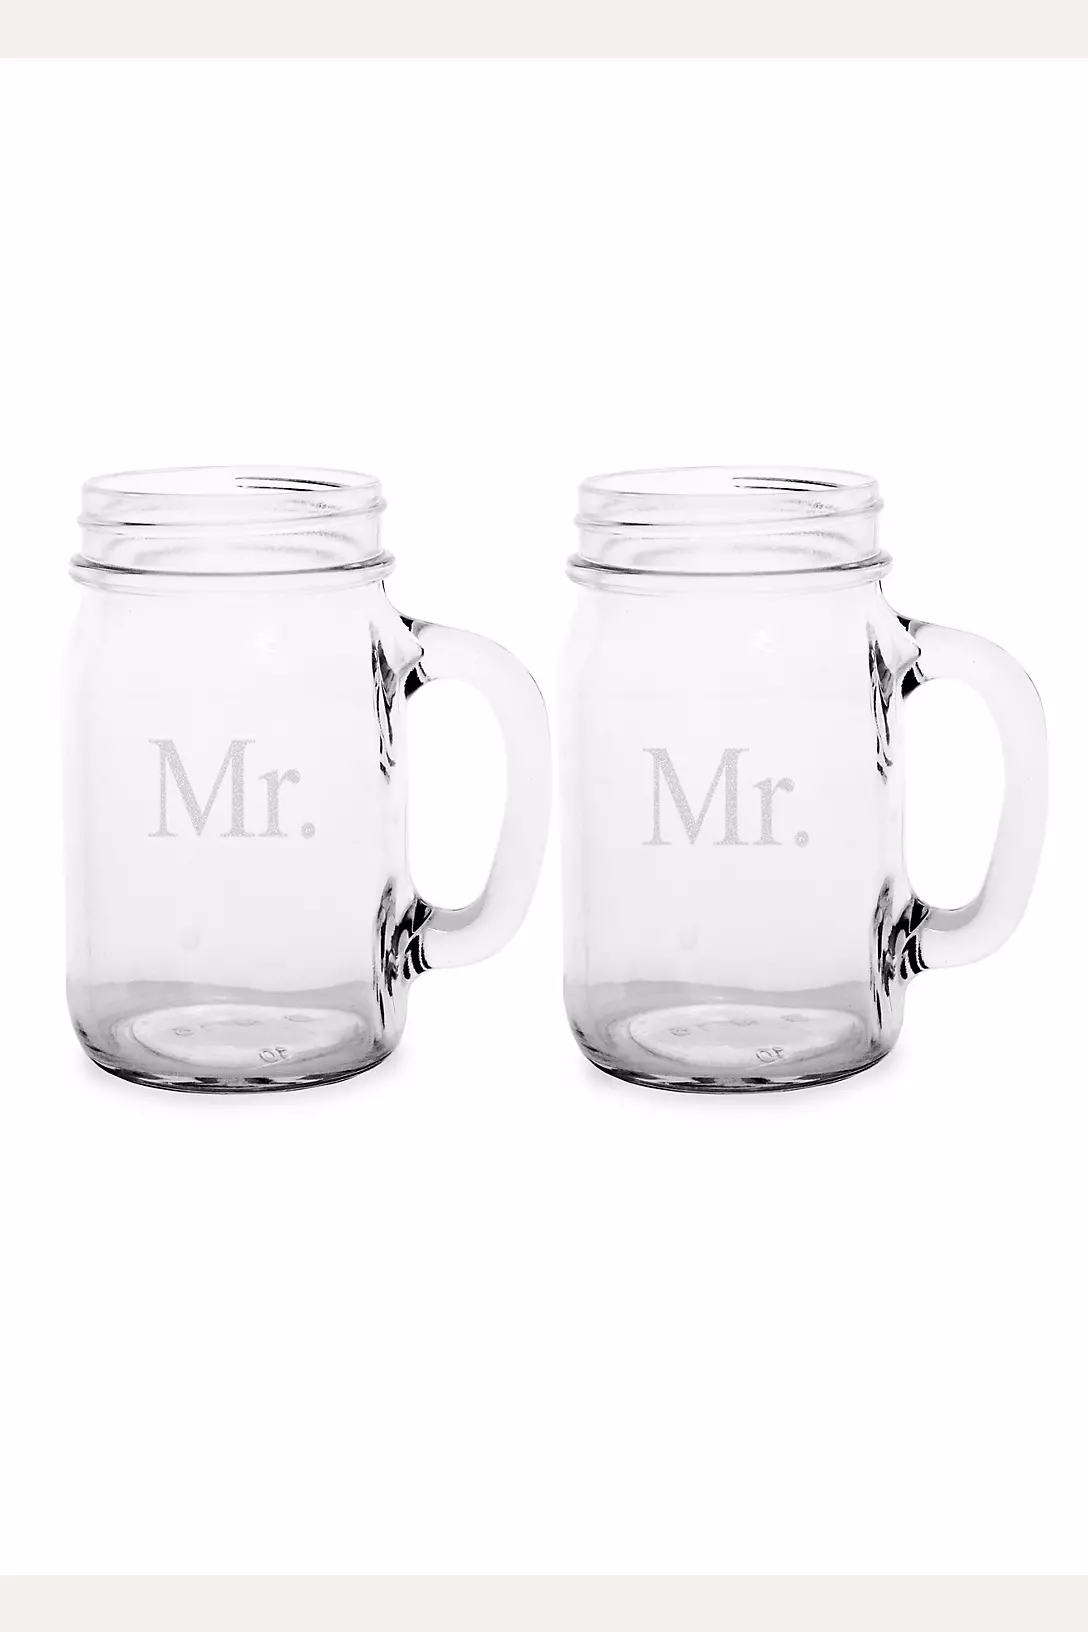 Mr. and Mr. Old Fashioned Drinking Jar Set Image